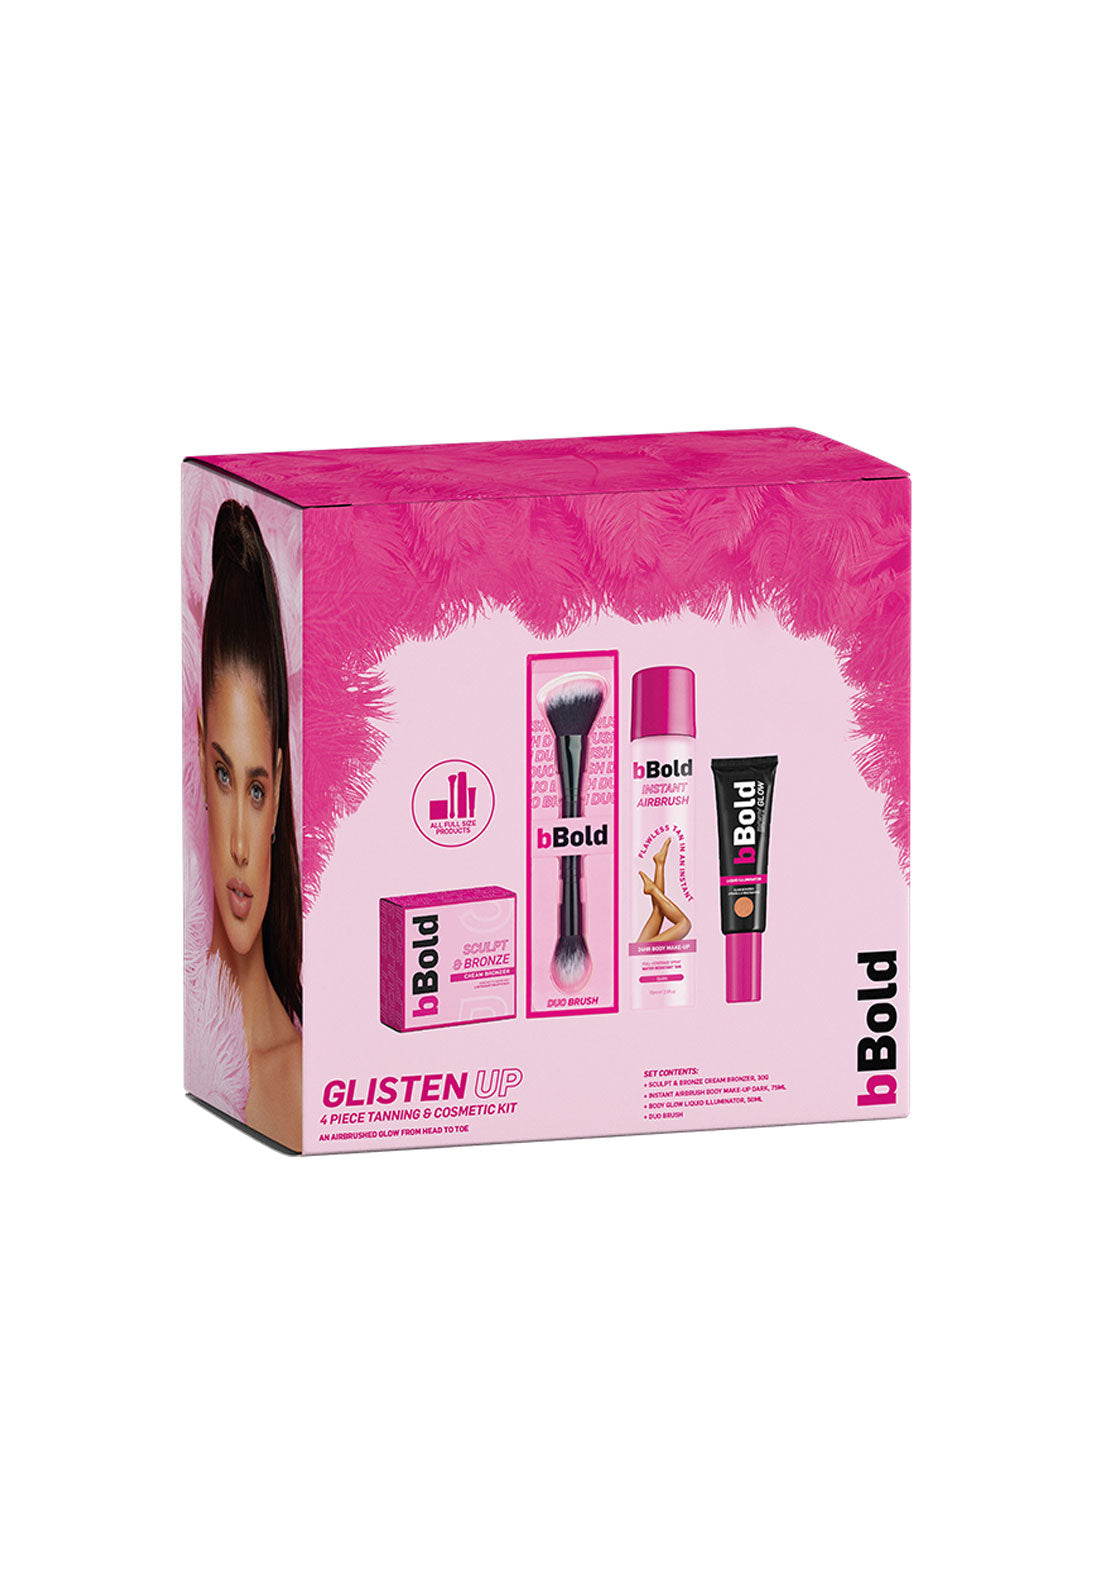 Bbold Glisten Up 4 Piece Tanning &amp; Cosmetics Gift Set 1 Shaws Department Stores